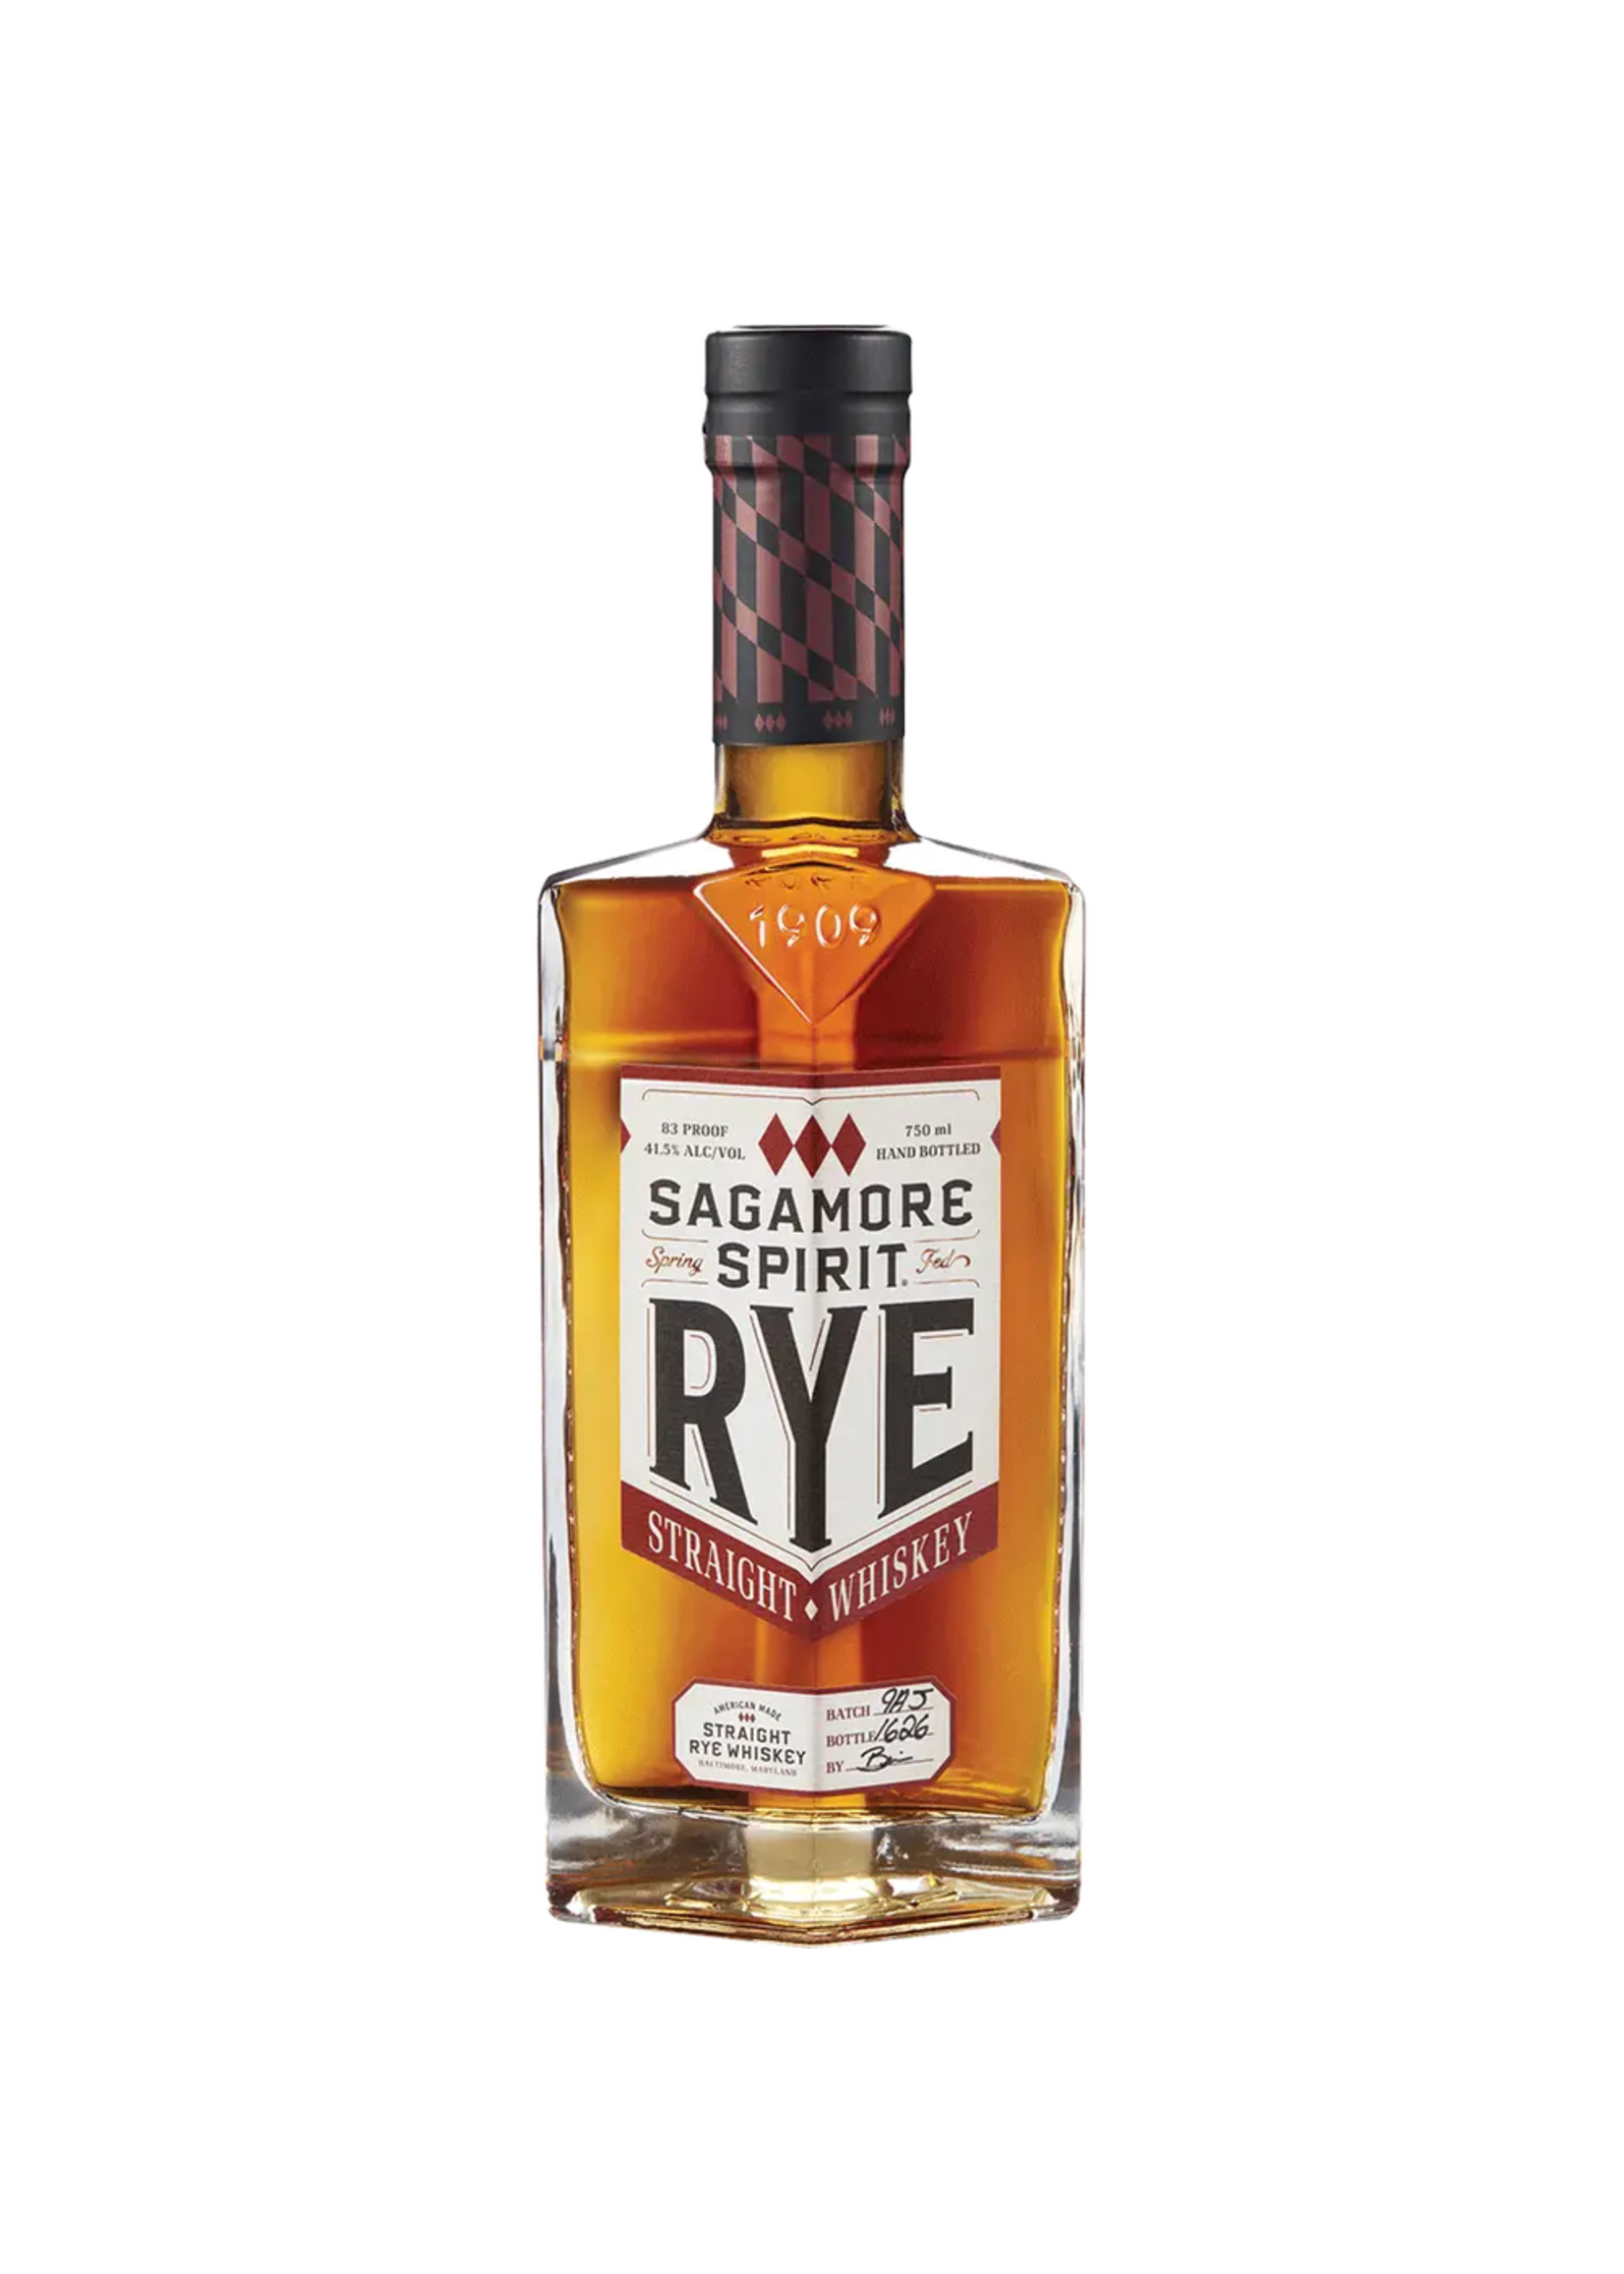 Sagamore Spirit Rye Straight Whiskey 83Proof 750ml